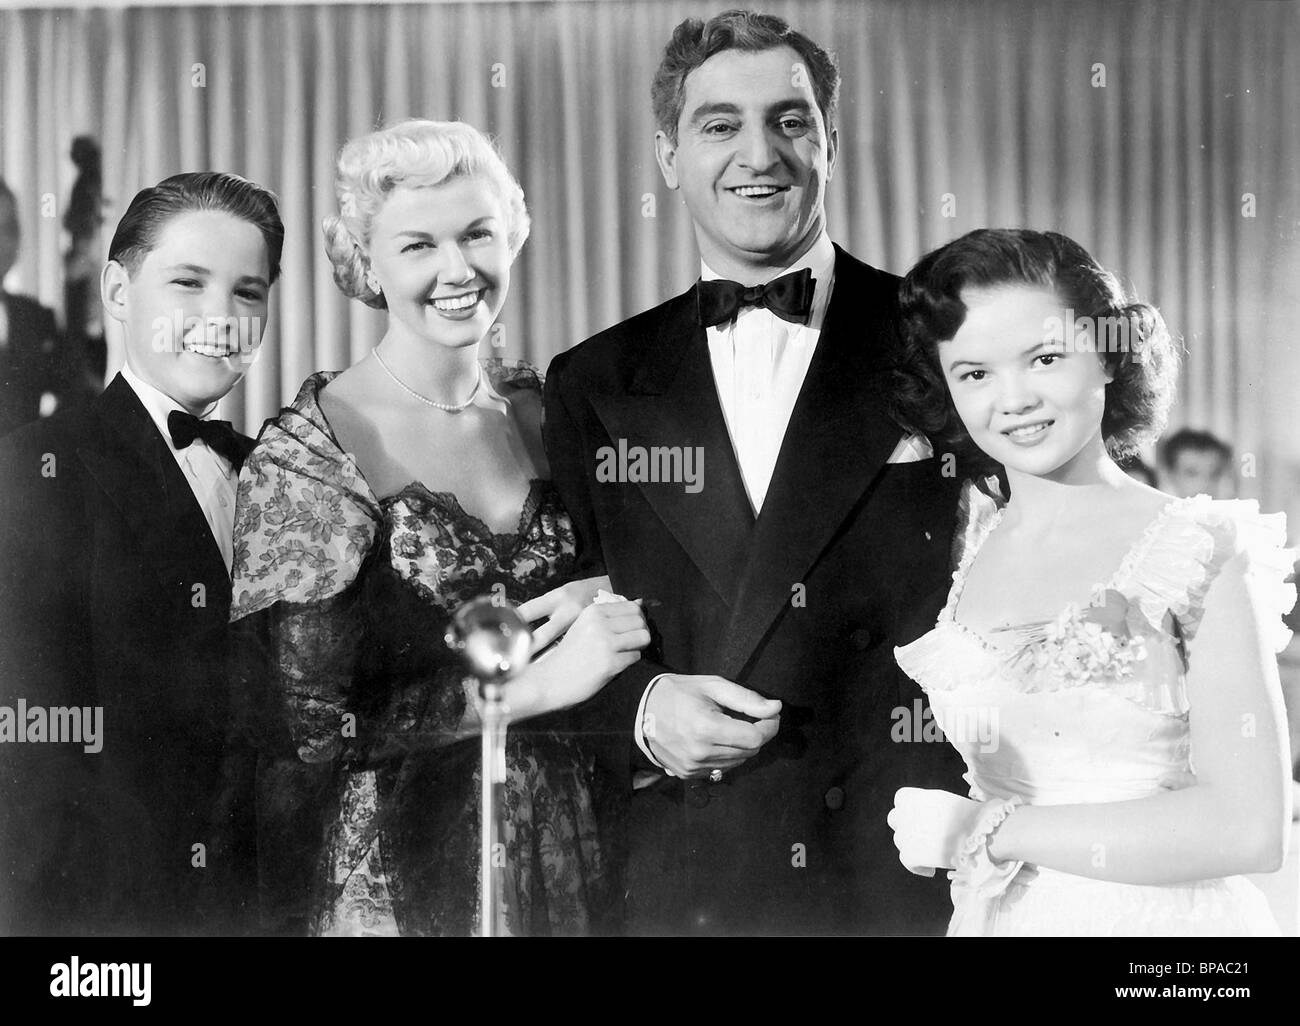 ROBERT LYDEN, DORIS DAY, DANNY THOMAS, BUNNY LEWBEL, I'LL SEE YOU IN MY DREAMS, 1951 Stock Photo